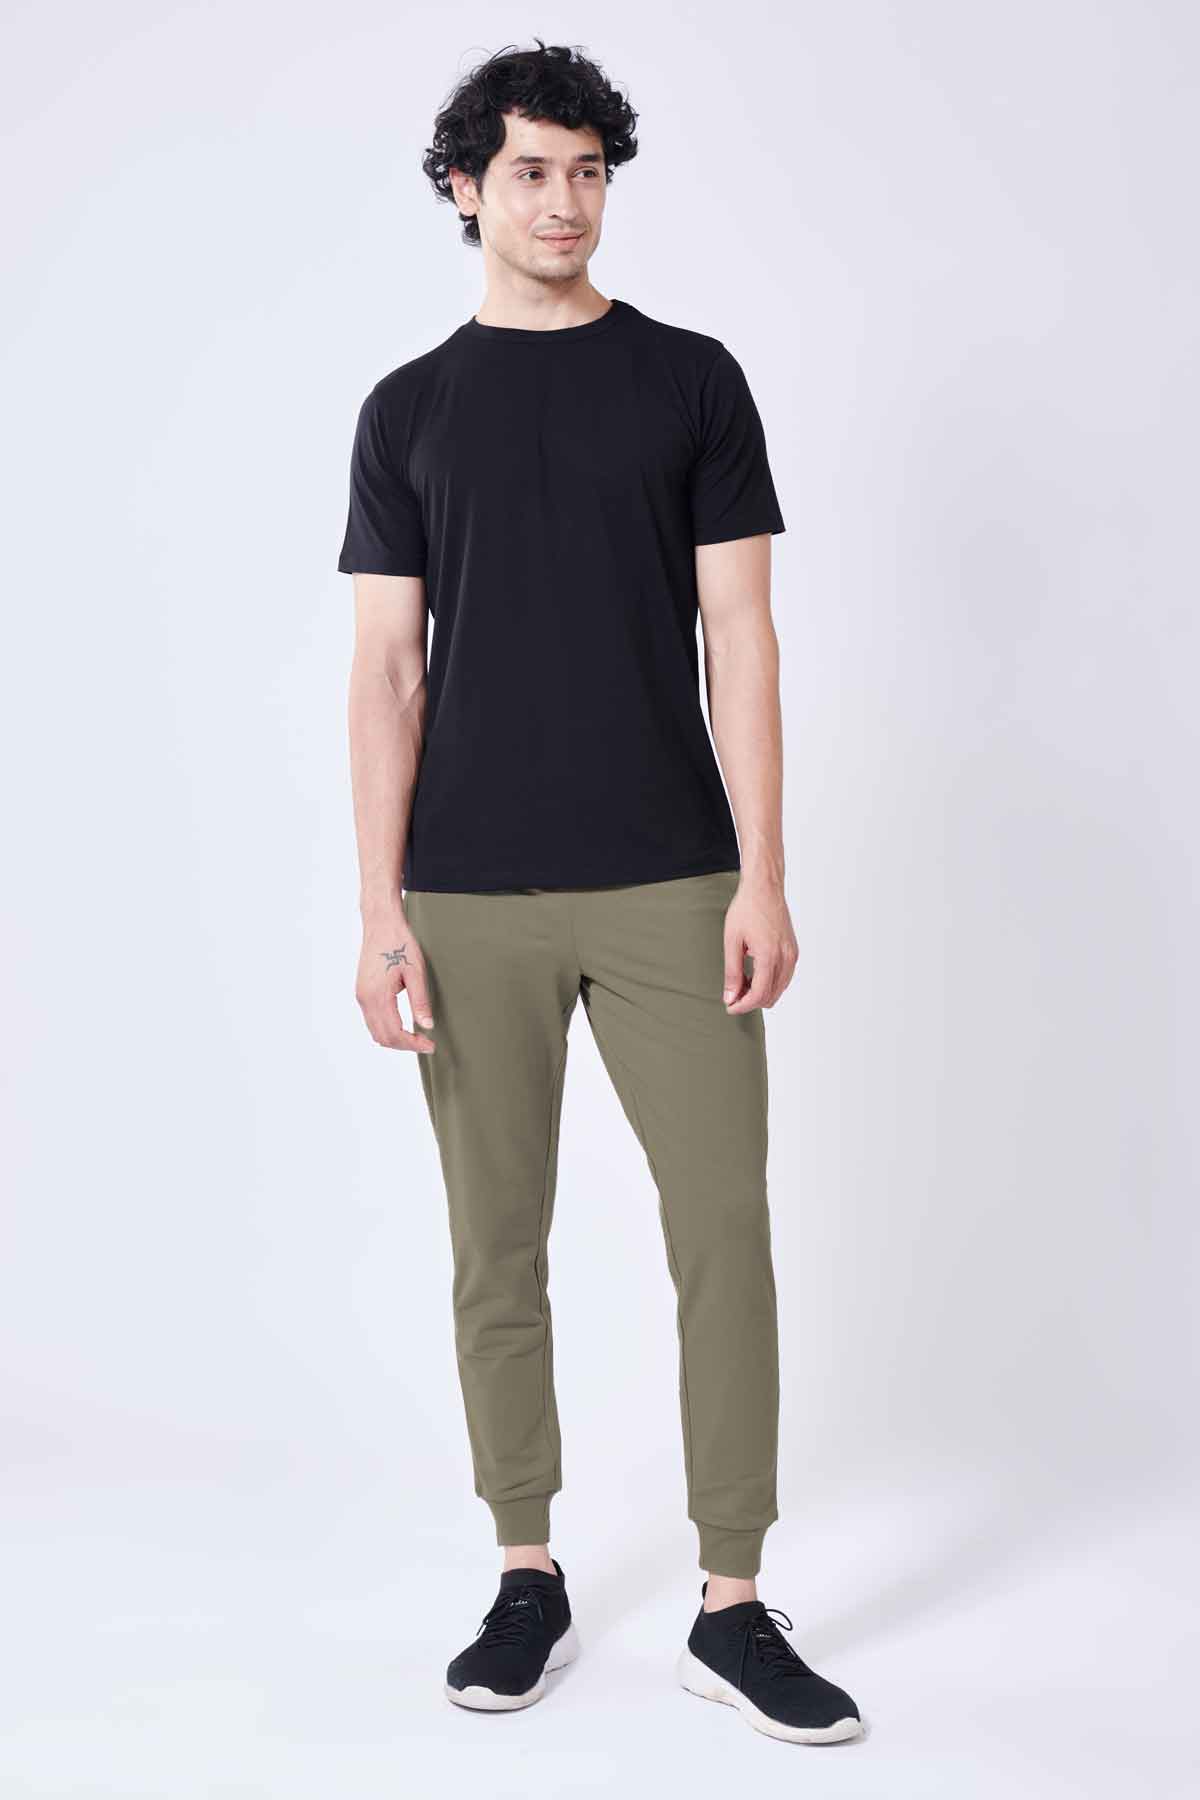 Dark colour Shirt and pants color combinations, men | Shirt outfit men,  Black pants men, Olive green shirt outfit